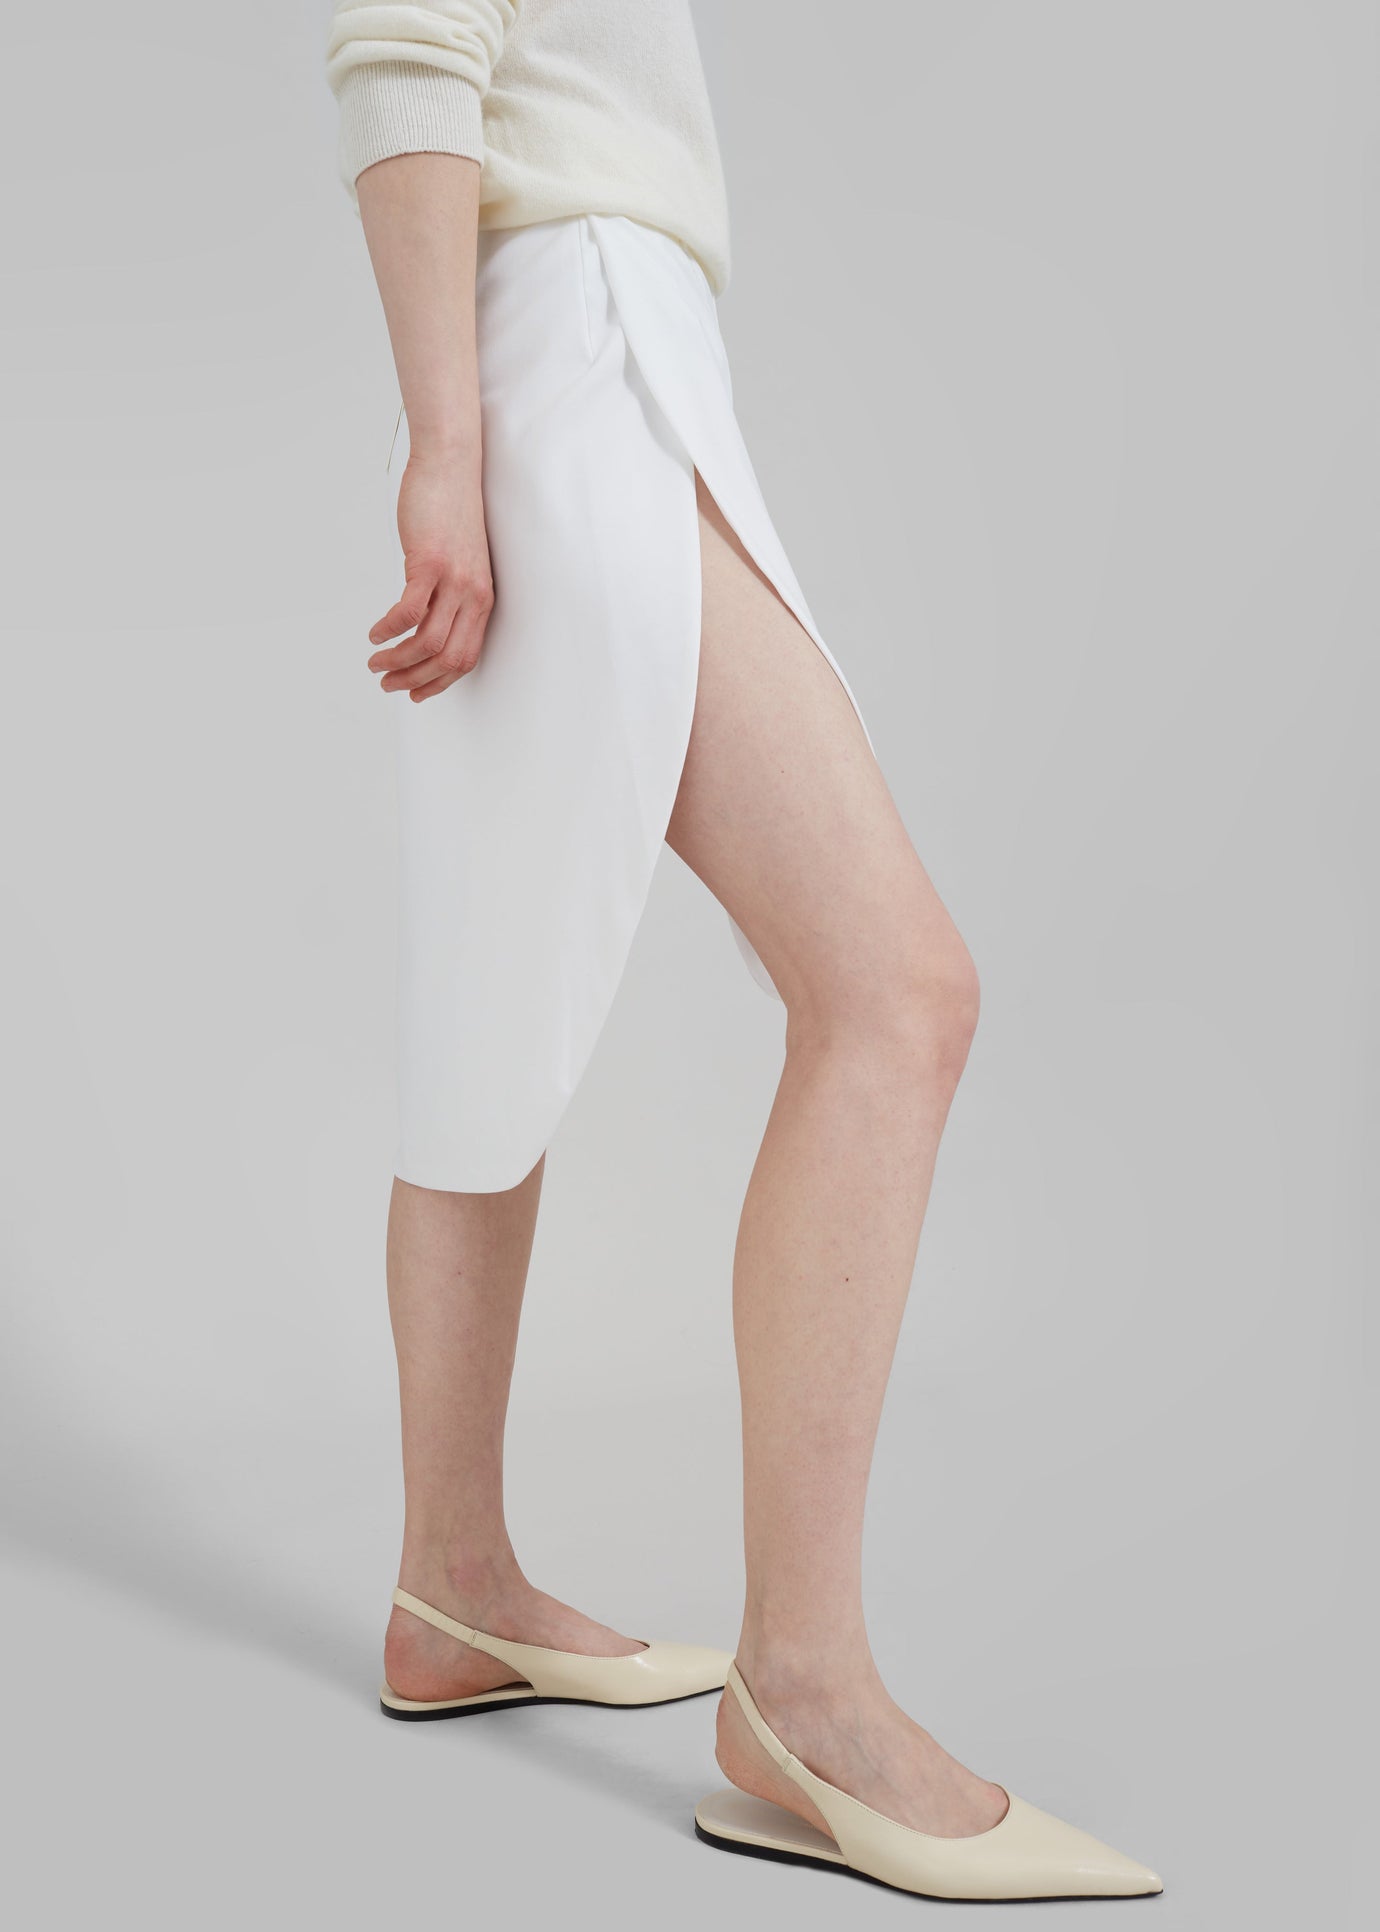 Bevza Tulip Skirt - Ivory